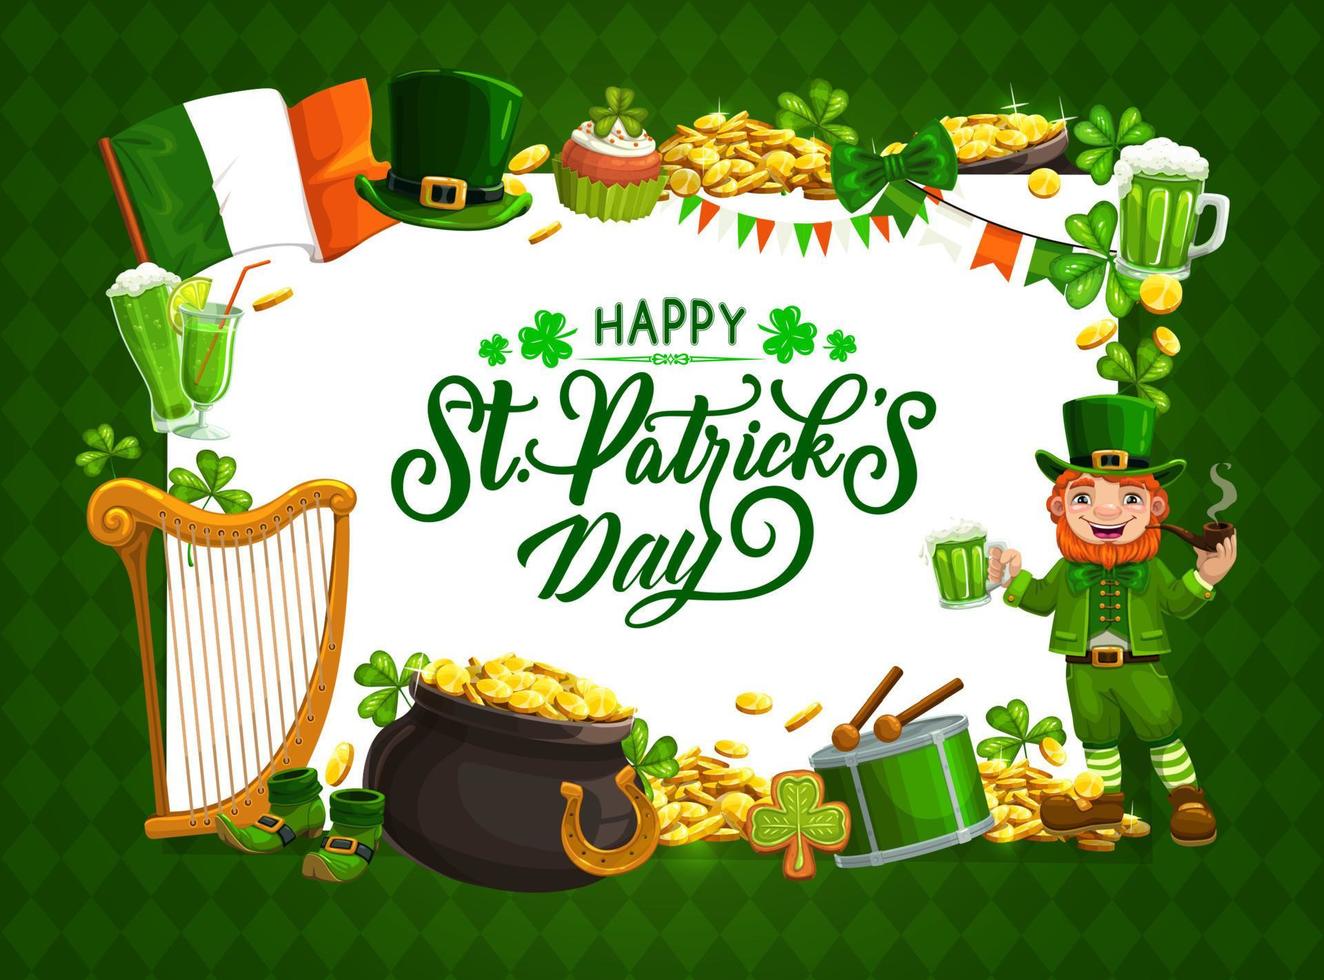 St Patrick day, Irish holiday Celtic luck symbols vector